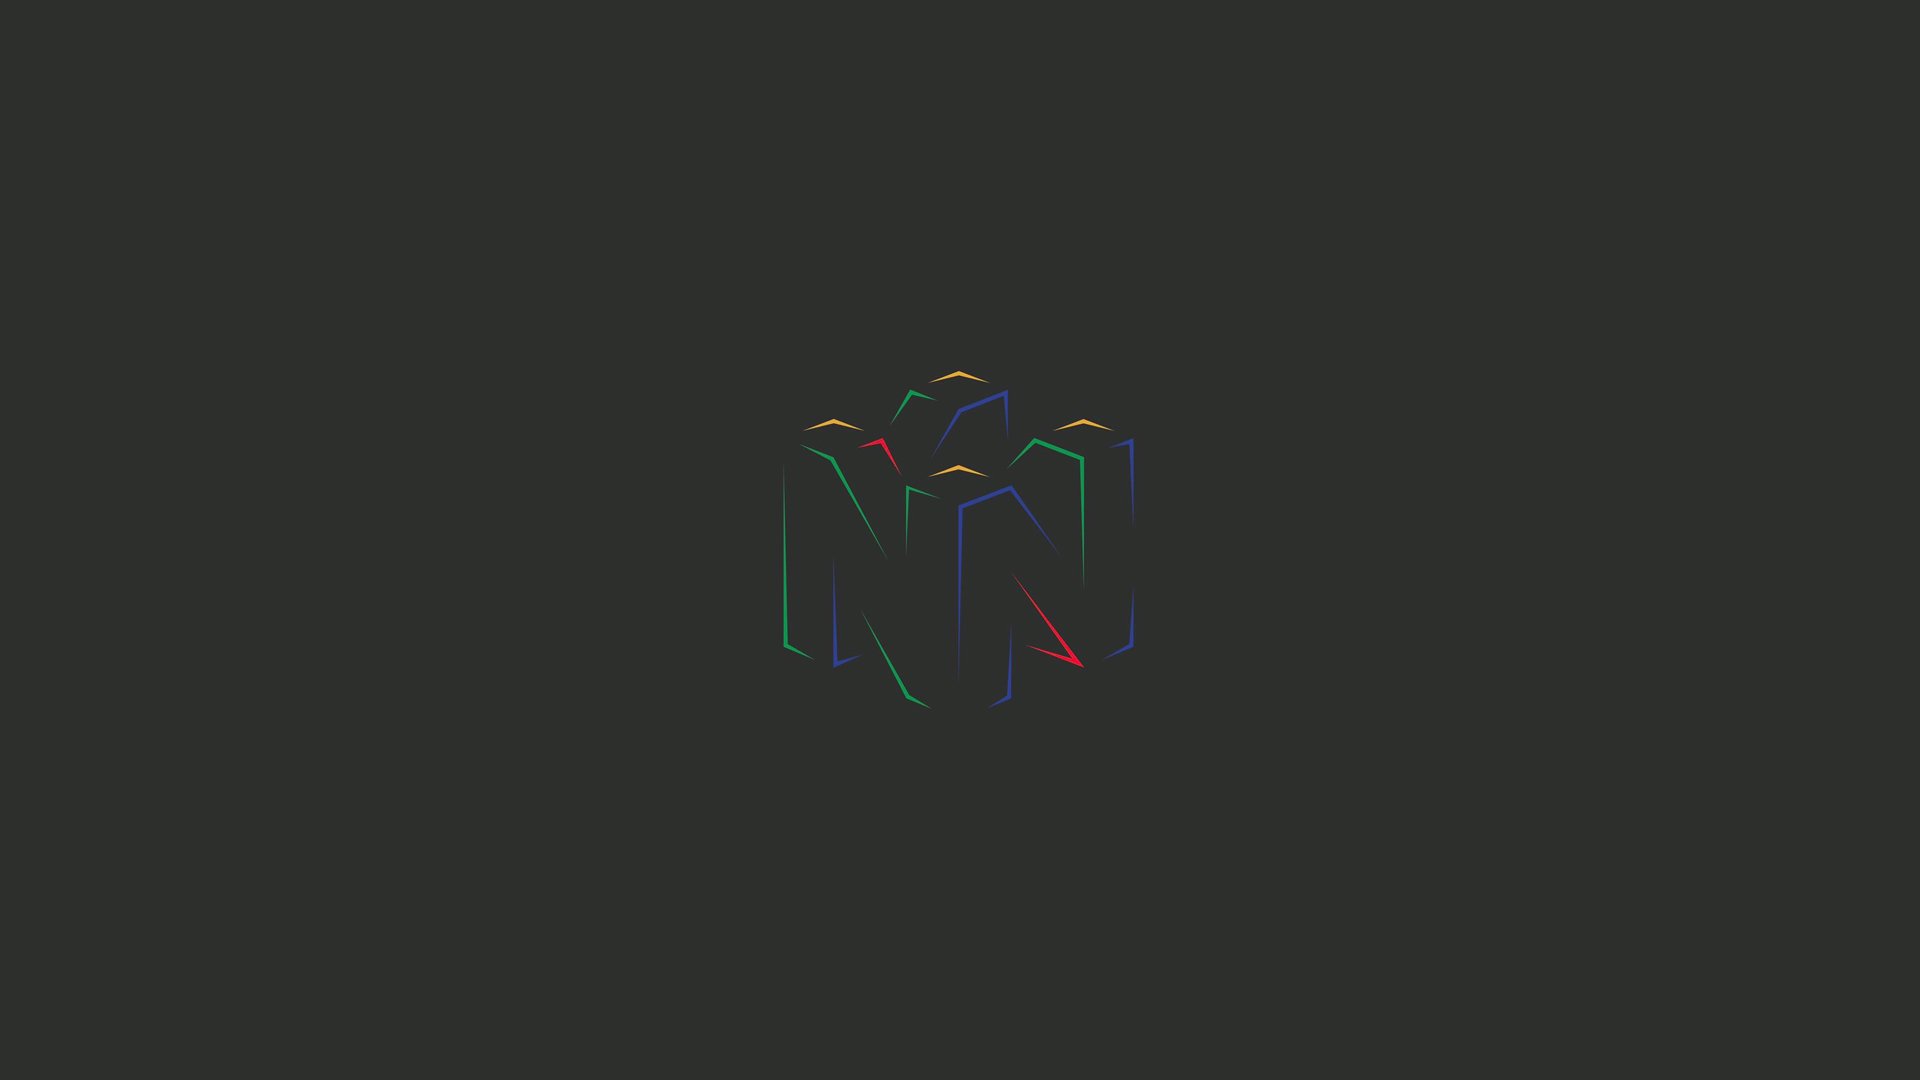 N64, Minimalism Wallpaper